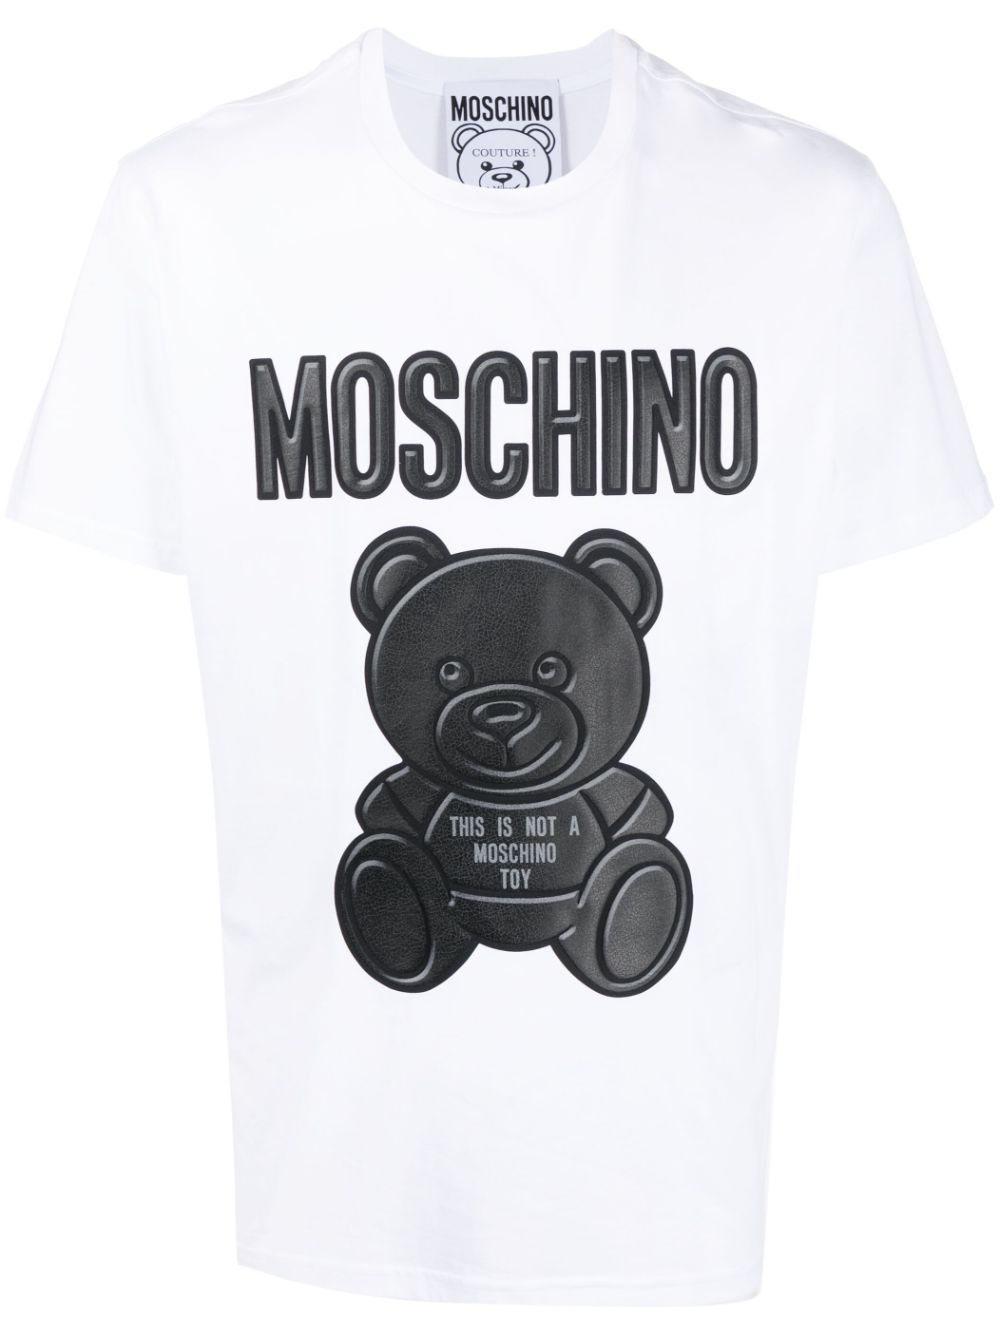 https://cdn-images.farfetch-contents.com/moschino-teddy-bear-logo-print-t-shirt_20409879_45570758_1000.jpg